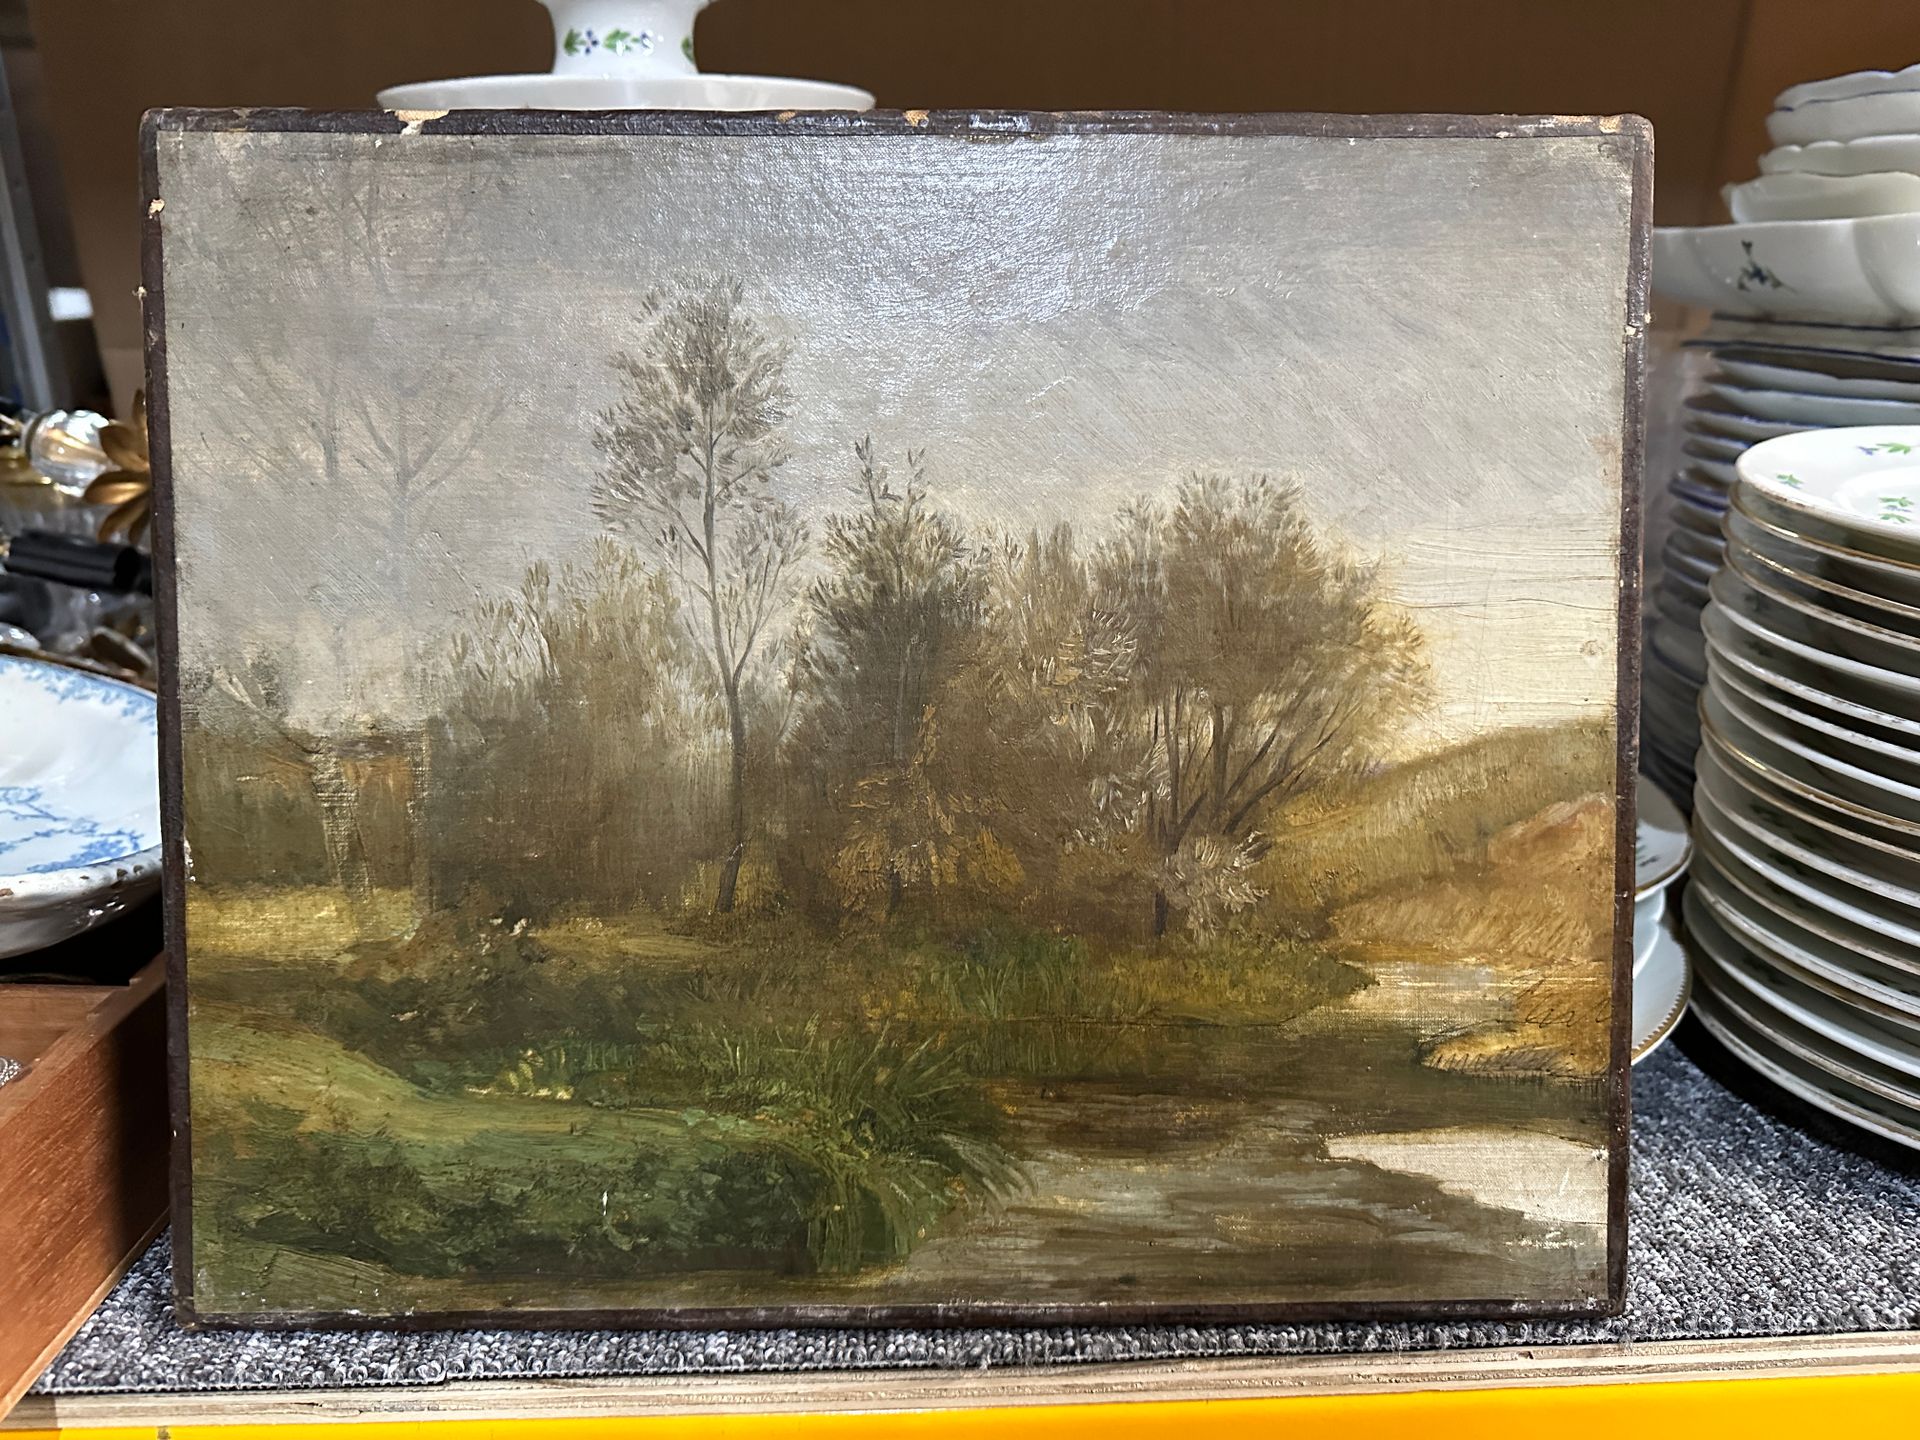 Null Scuola Barbizon

Paesaggio lacustre con alberi

Olio su tela

31 x 37,5 cm